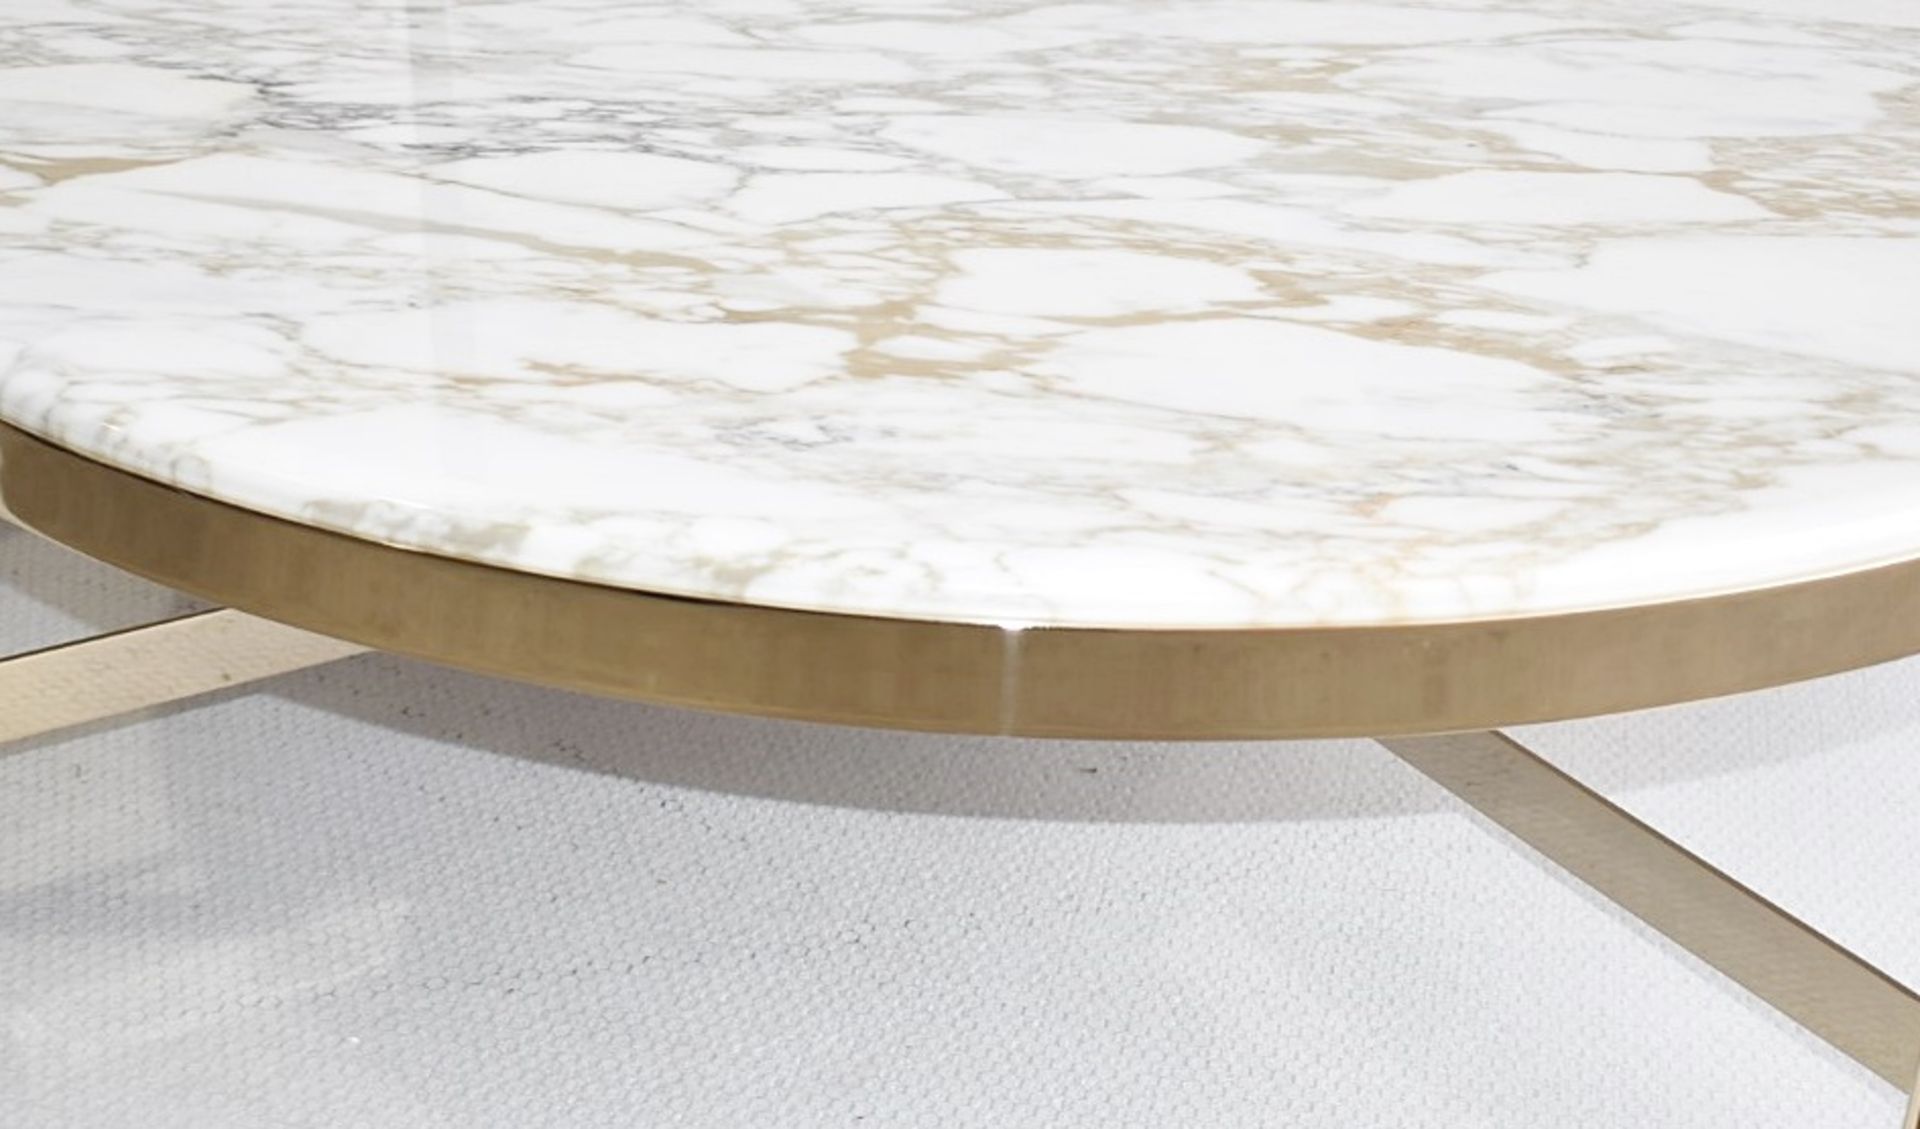 1 x ELIE SAAB MAISON 'Zenith' Luxury Italian Marble Topped Coffee Table - Original Price £6,480 - Image 6 of 6